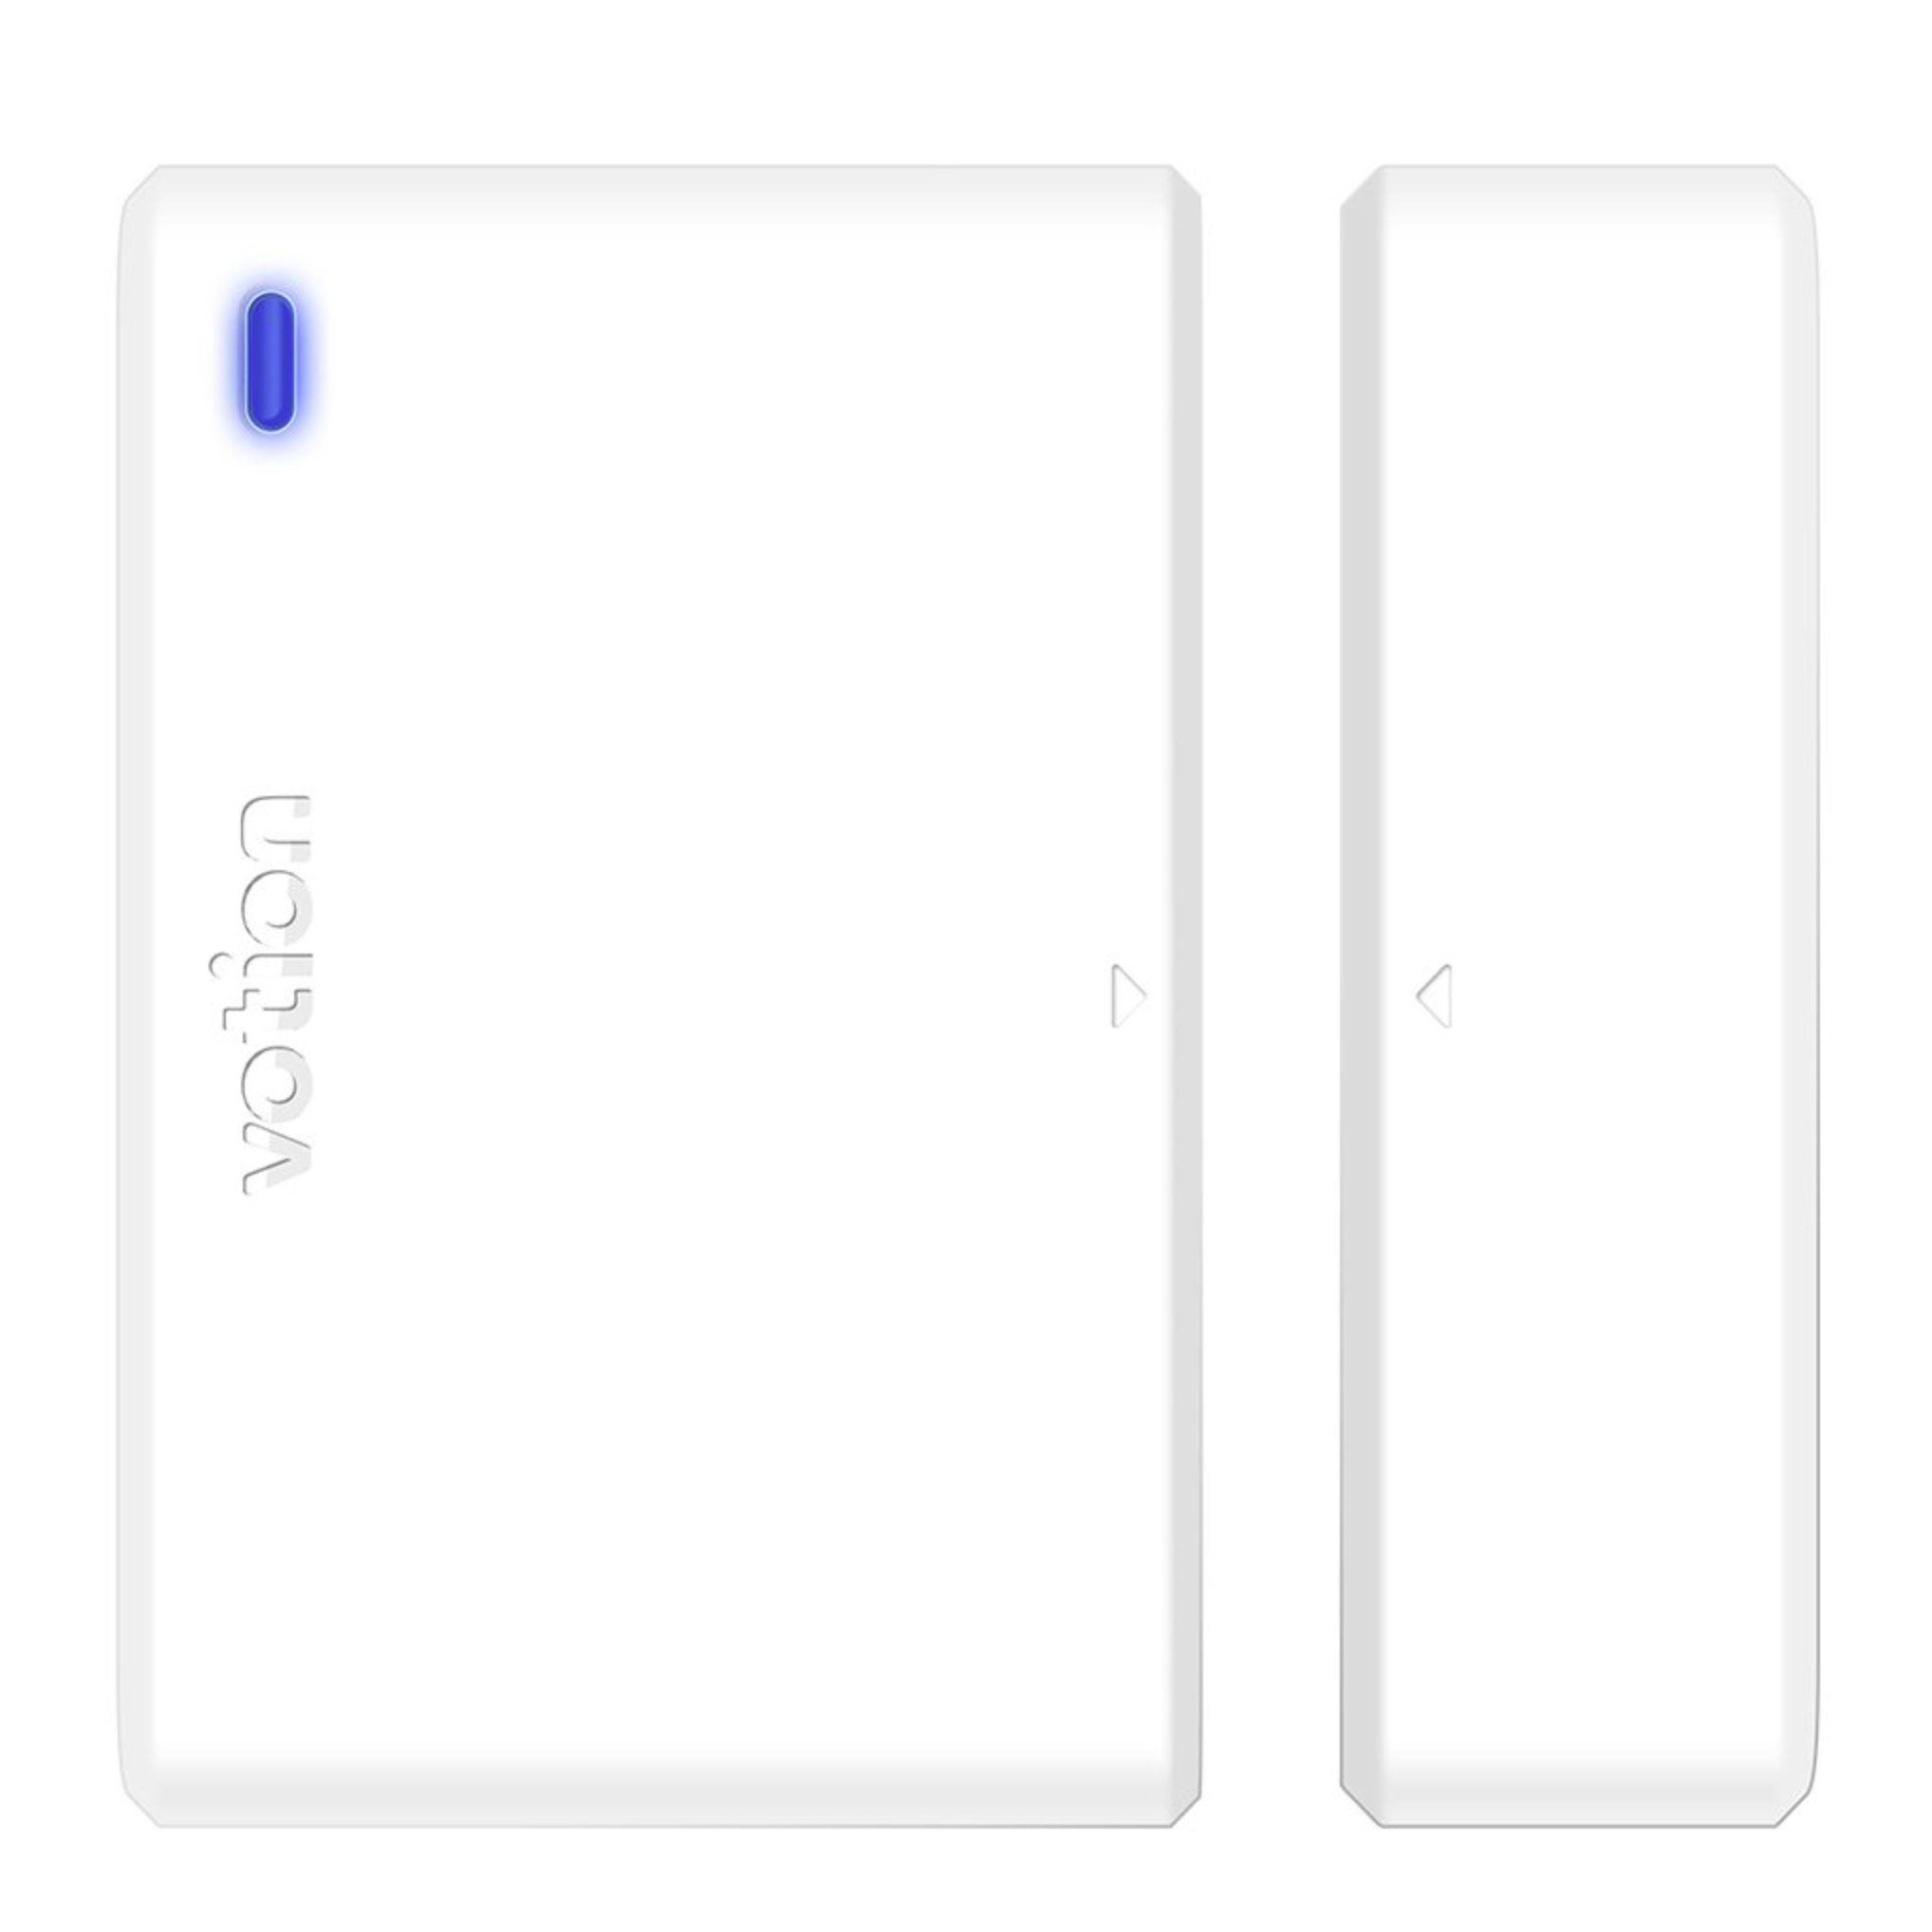 Votion Door & Window sensor on a white background